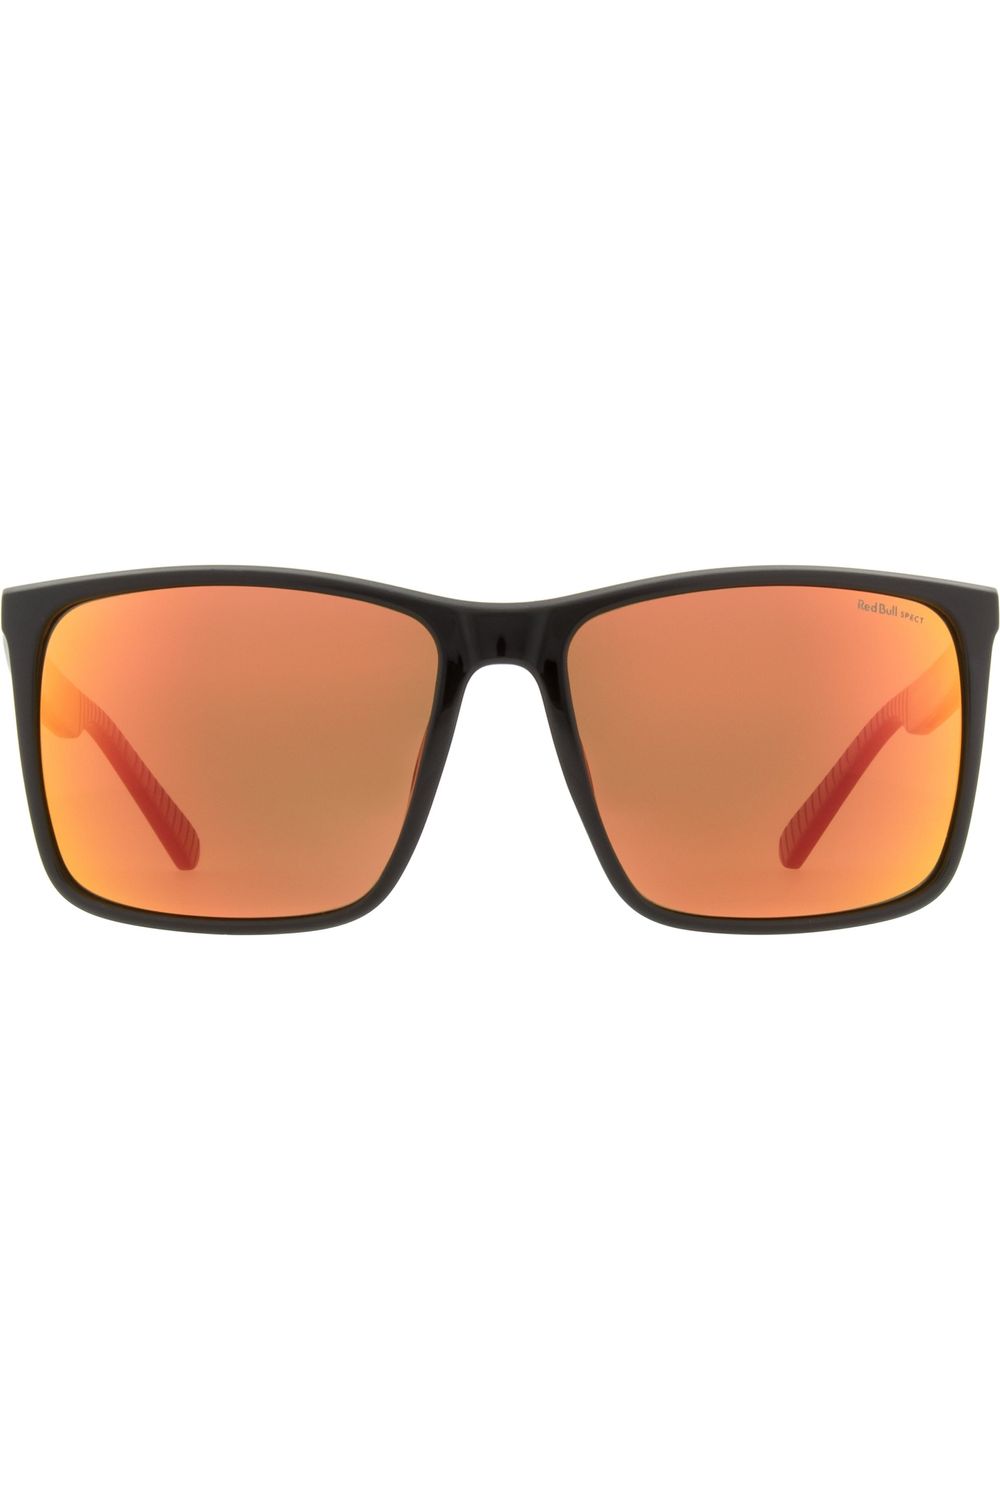 Bow-002P Sunglasses